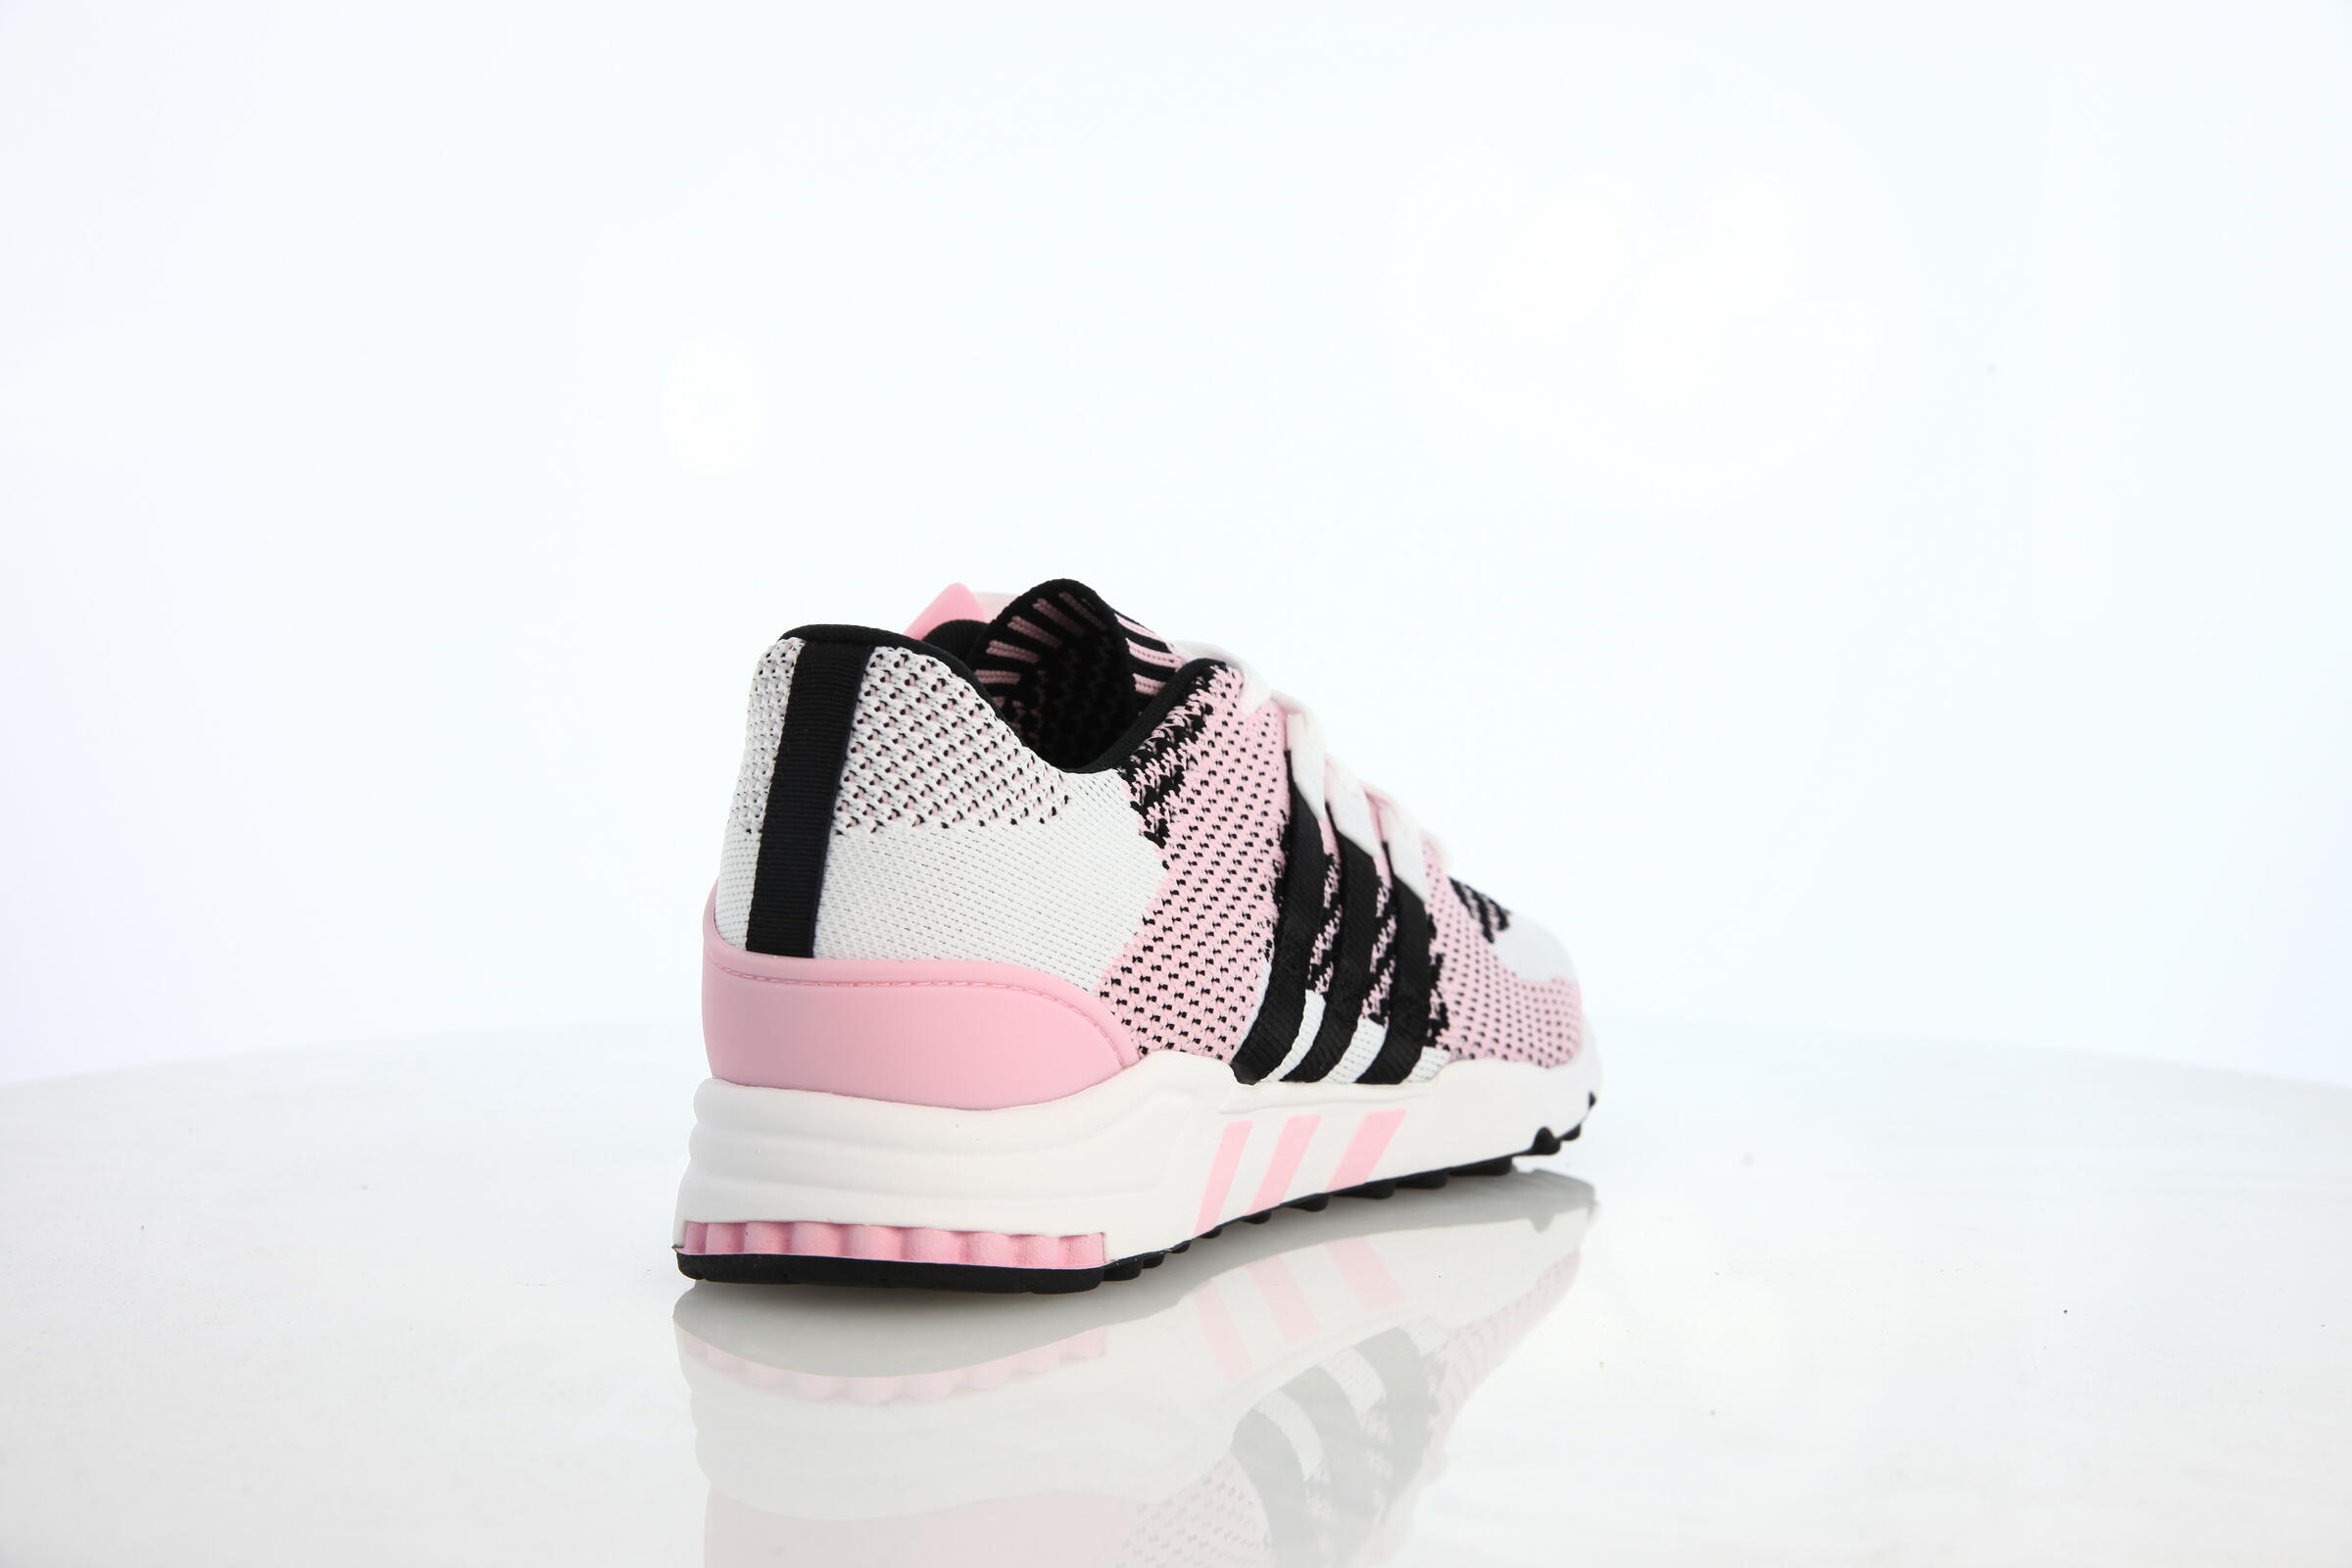 adidas Performance EQT Support Rf Primeknit "Wonder Pink"